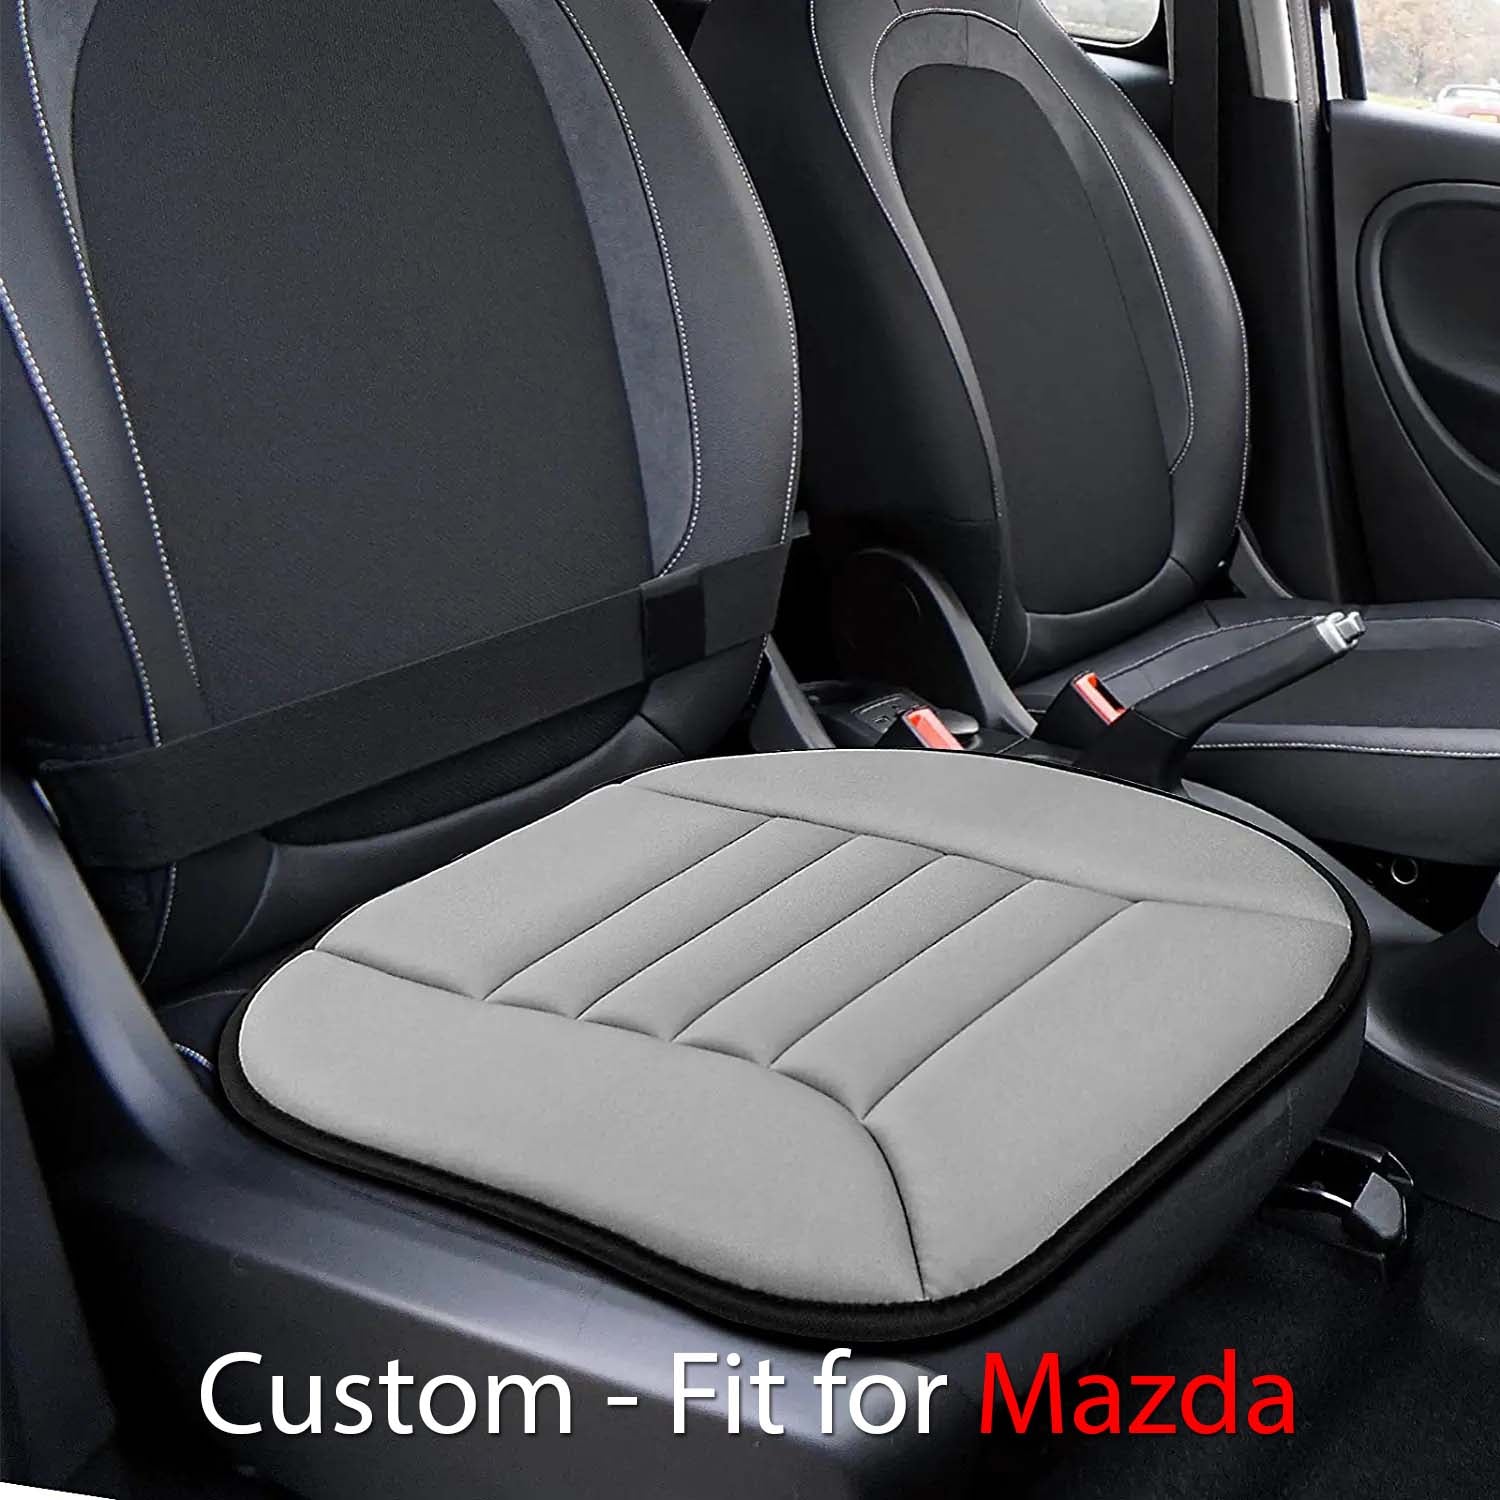 Car Seat Cushion with 1.2inch Comfort Memory Foam, Custom-Fit For Car, Seat Cushion for Car and Office Chair DLMA247